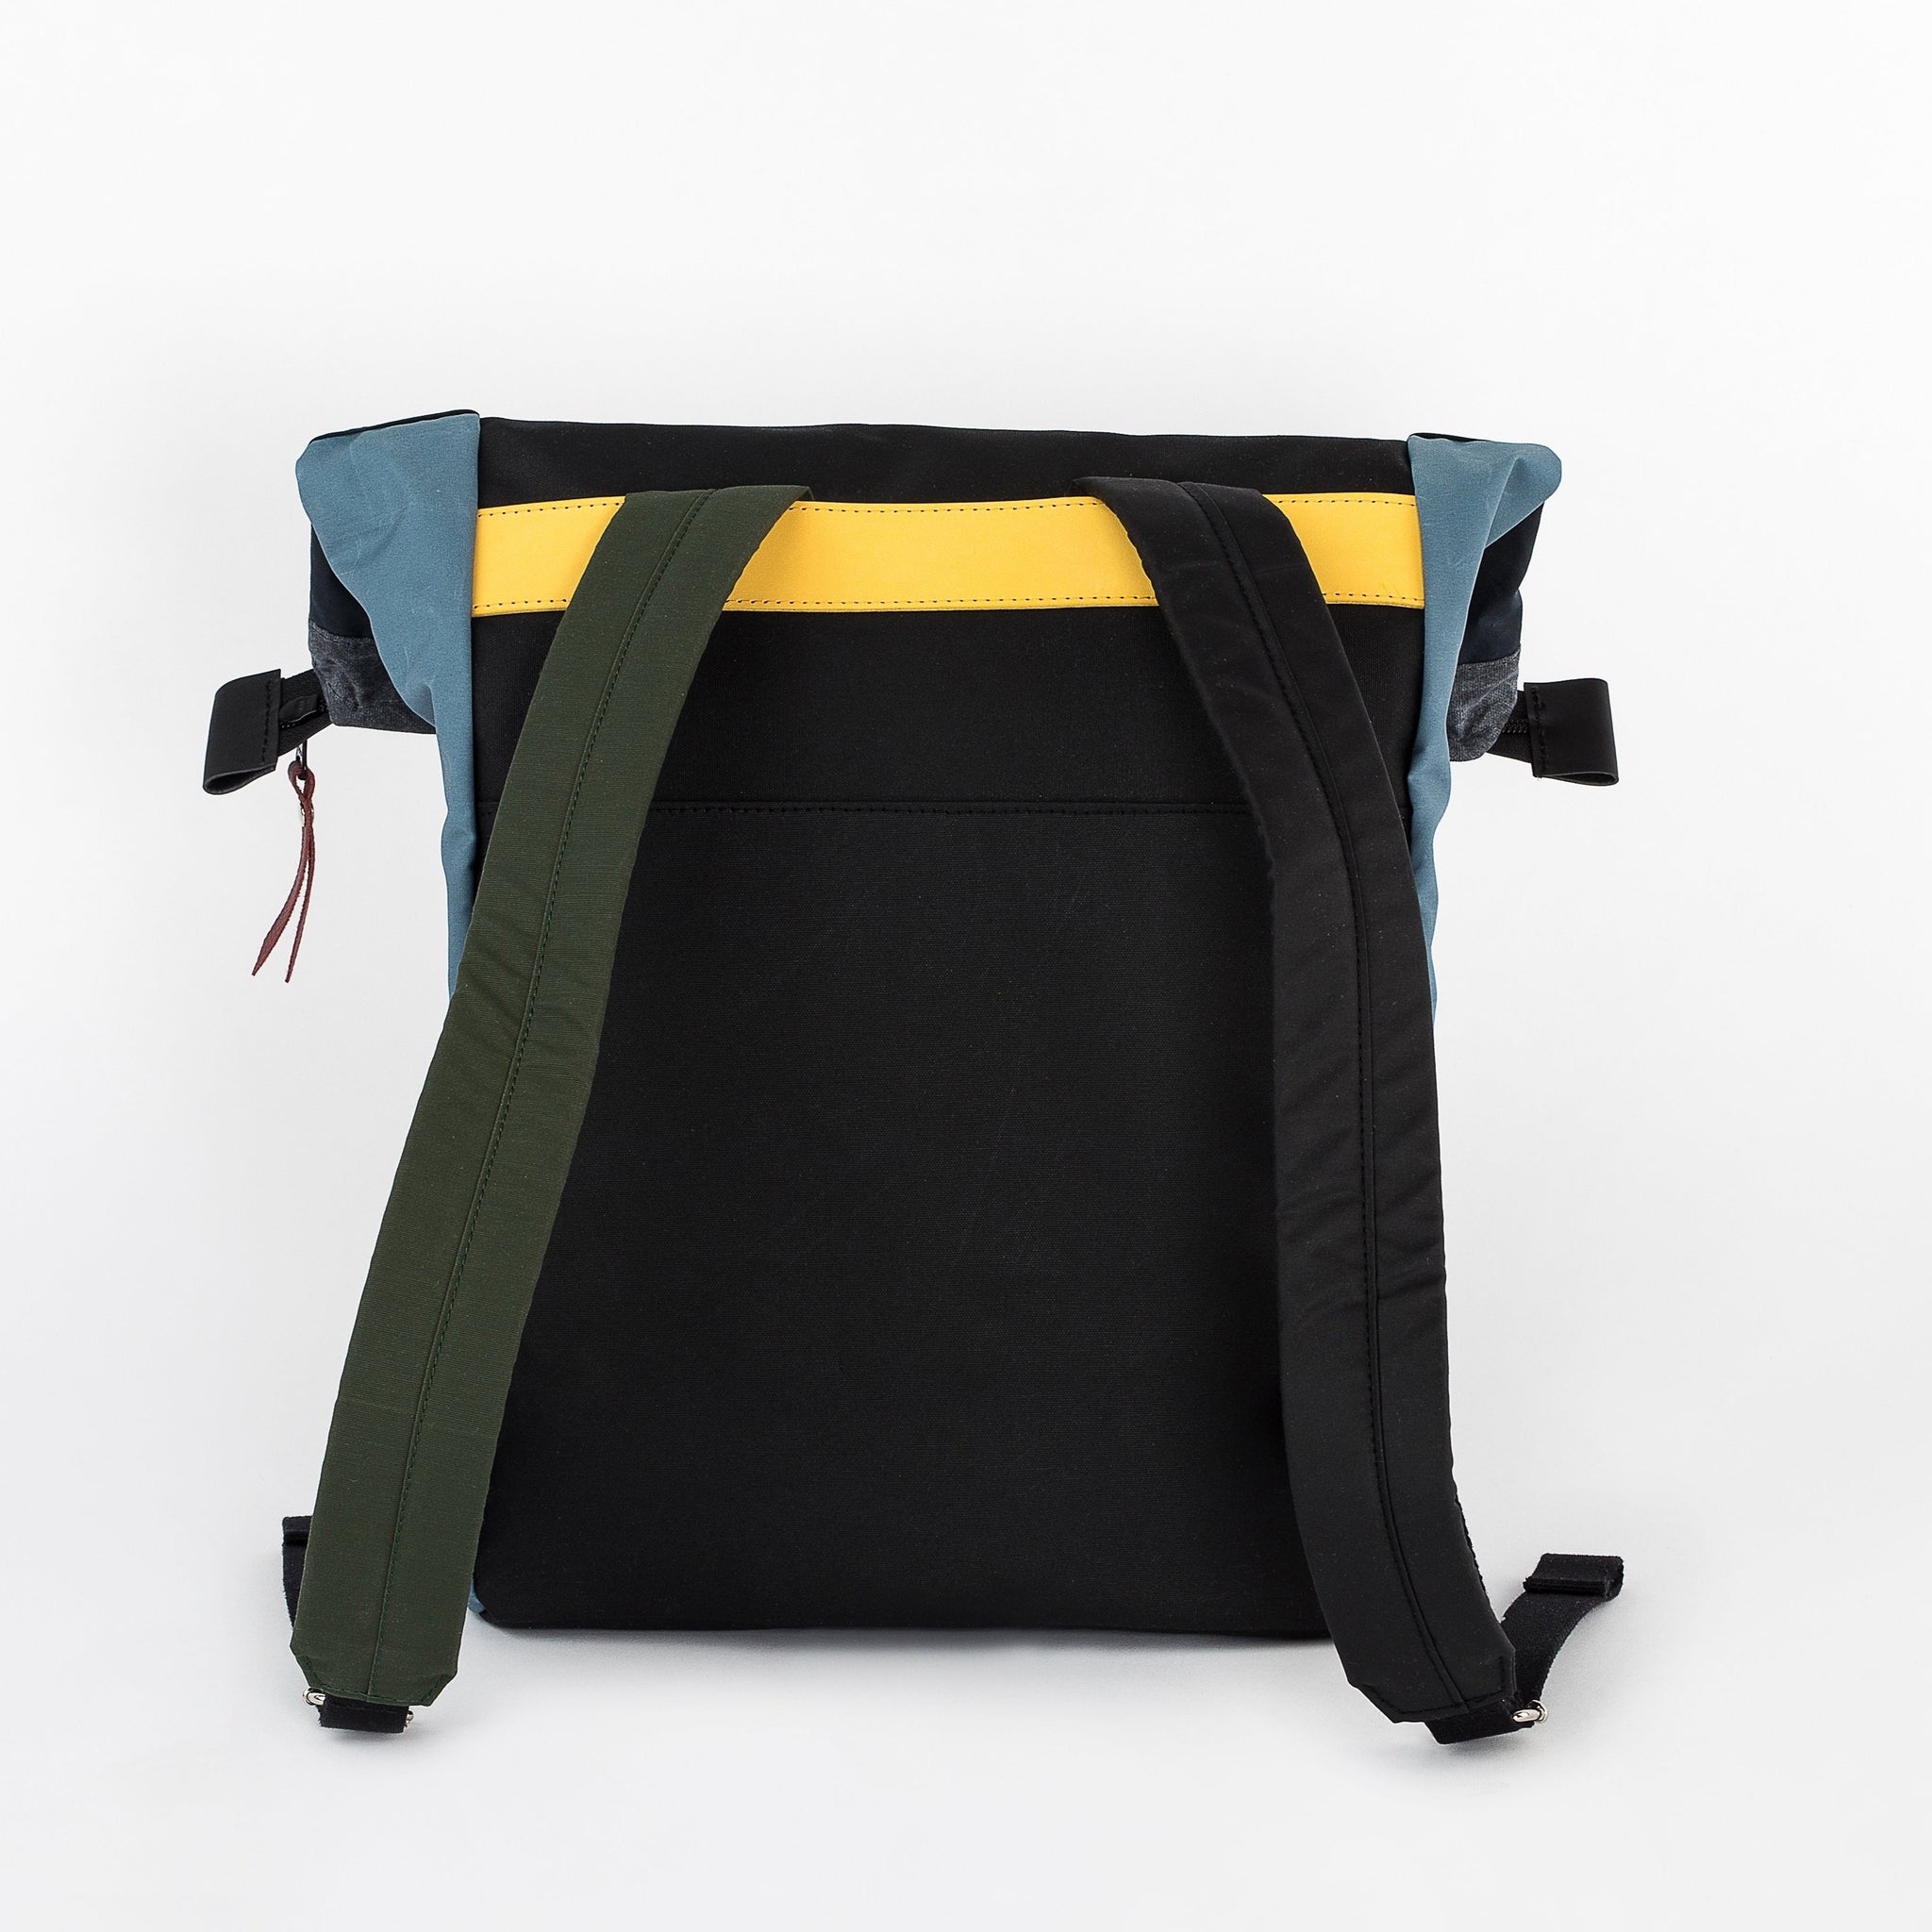 andthen.design-FlopTop | Backpack zero-1 zero waste colourblock backpack with odd straps